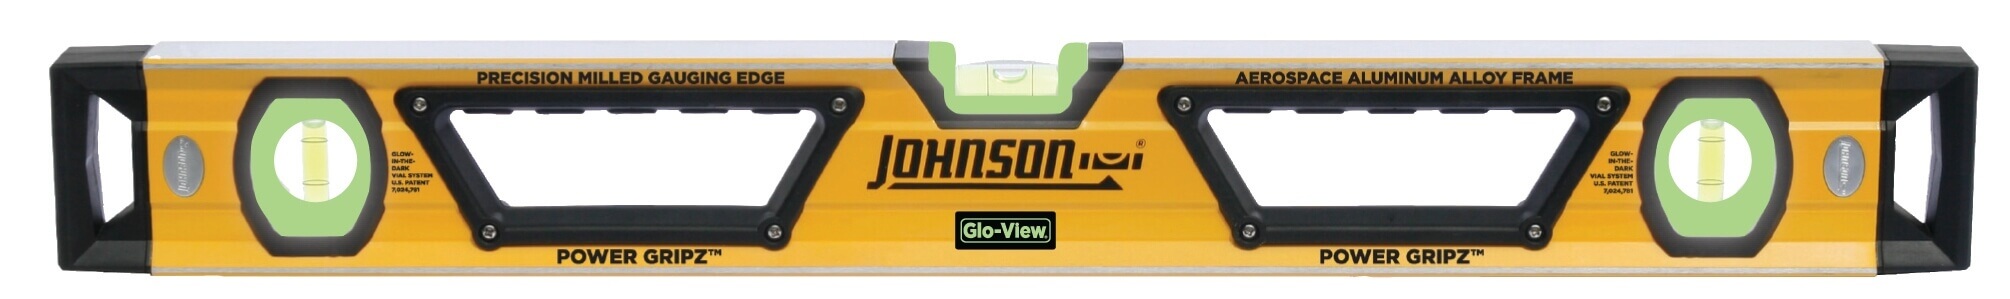 Johnson Level 24 Magnetic Glo-View Heavy Duty Aluminum Box Level 1718-2400